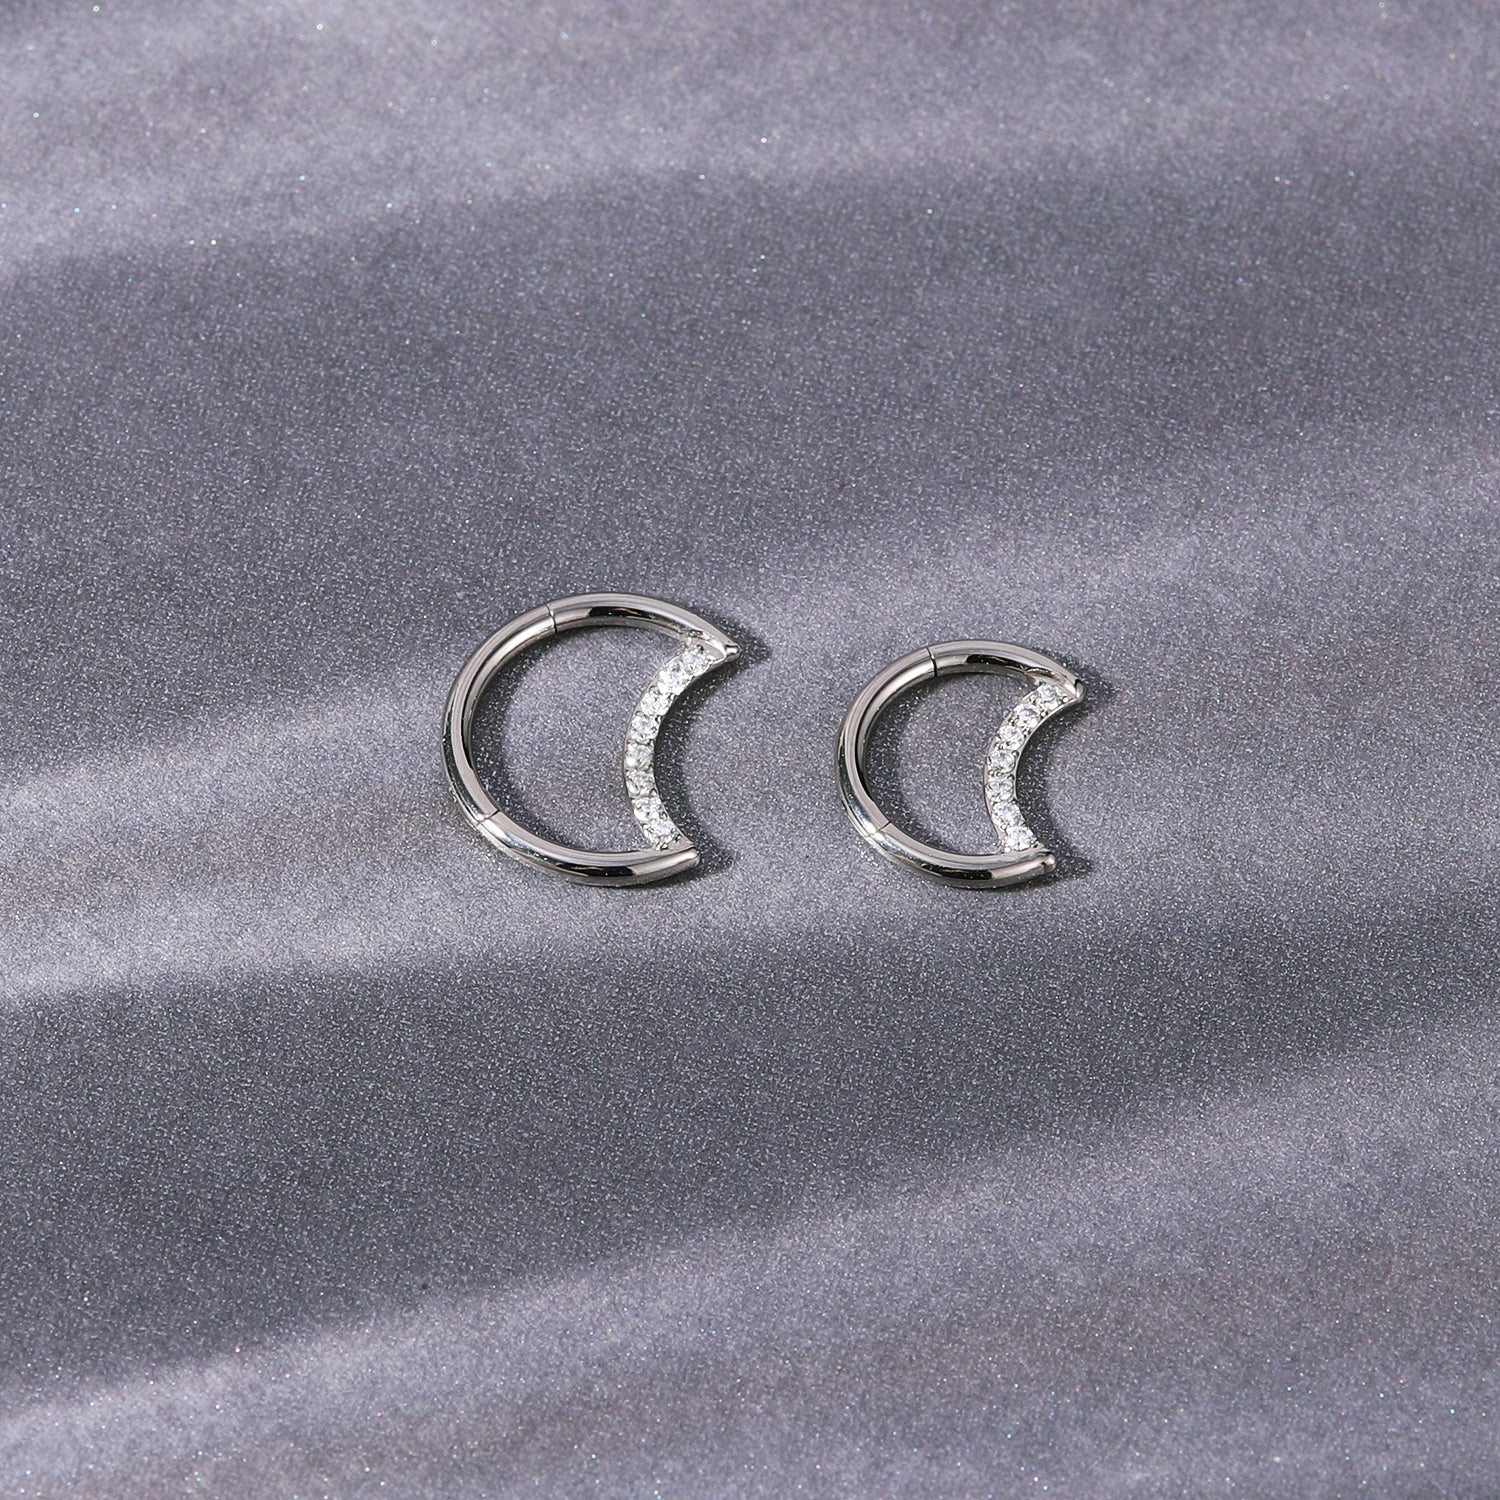 16g-g23-titanium-moon-septum-clicker-ring-crystal-conch-helix-cartilage-piercing